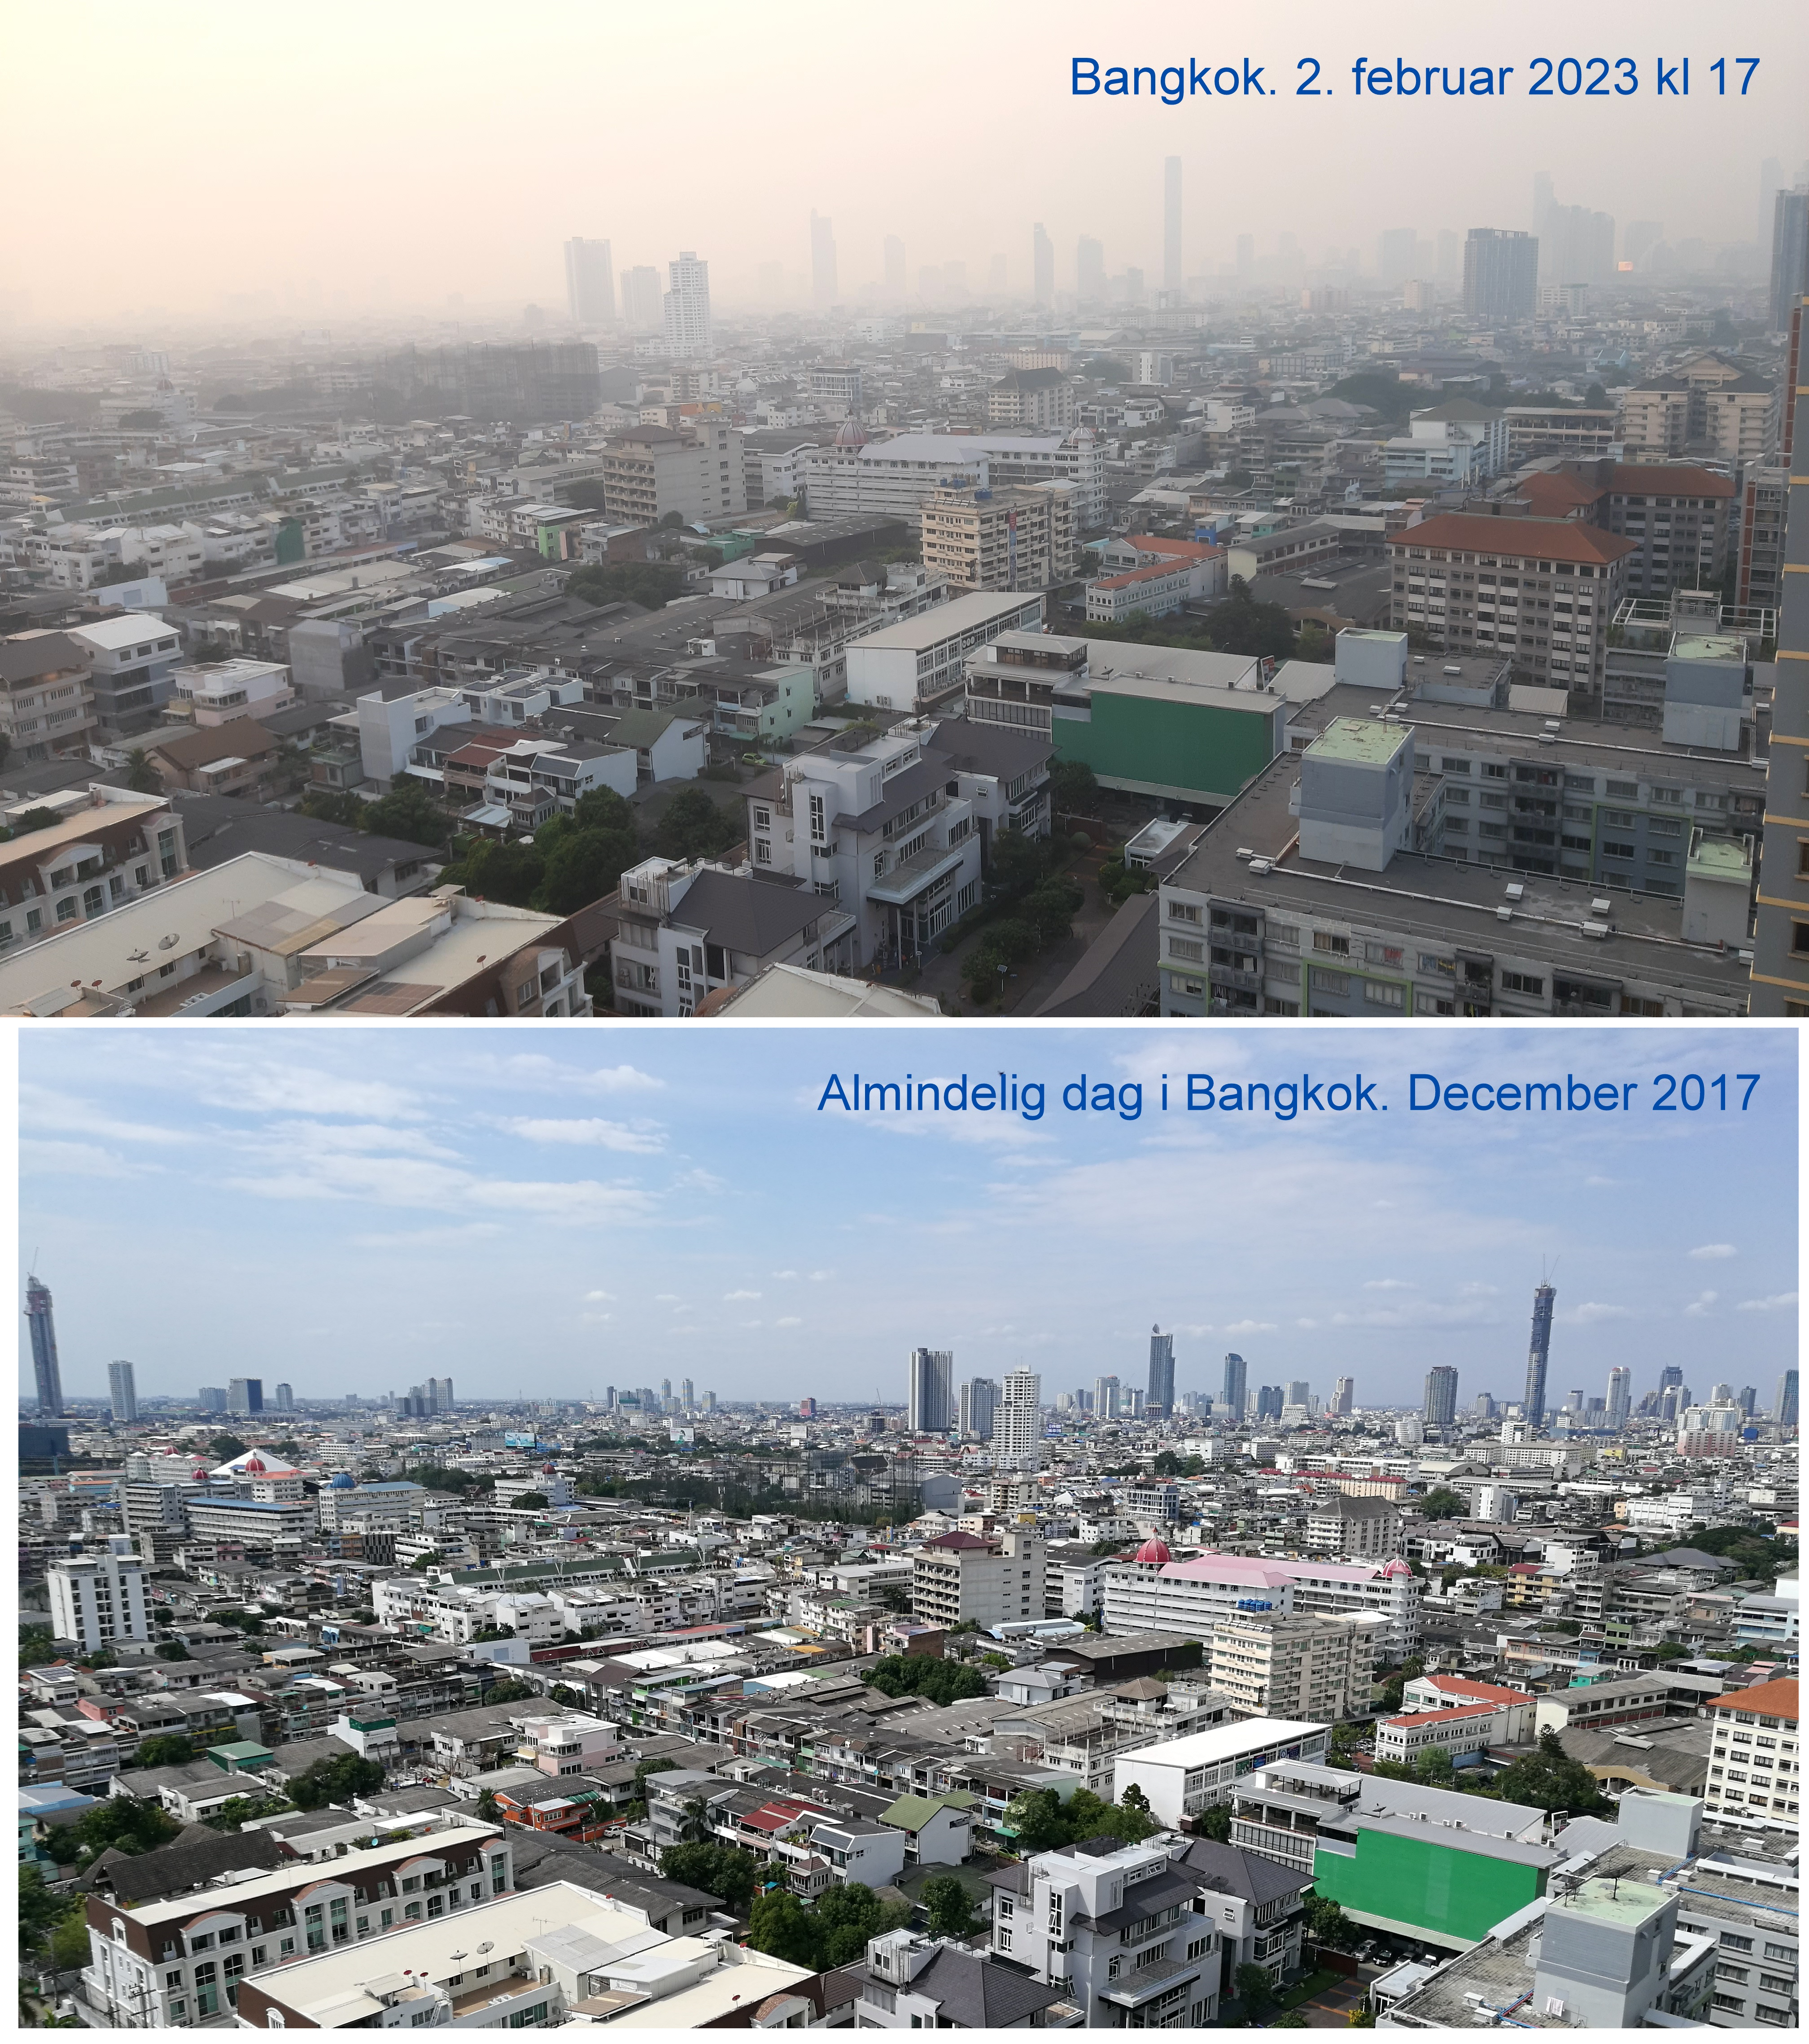 www.thaiguide.dk/images/forum/forurening/forurening%20bkk%202017%20-%202023%201.png